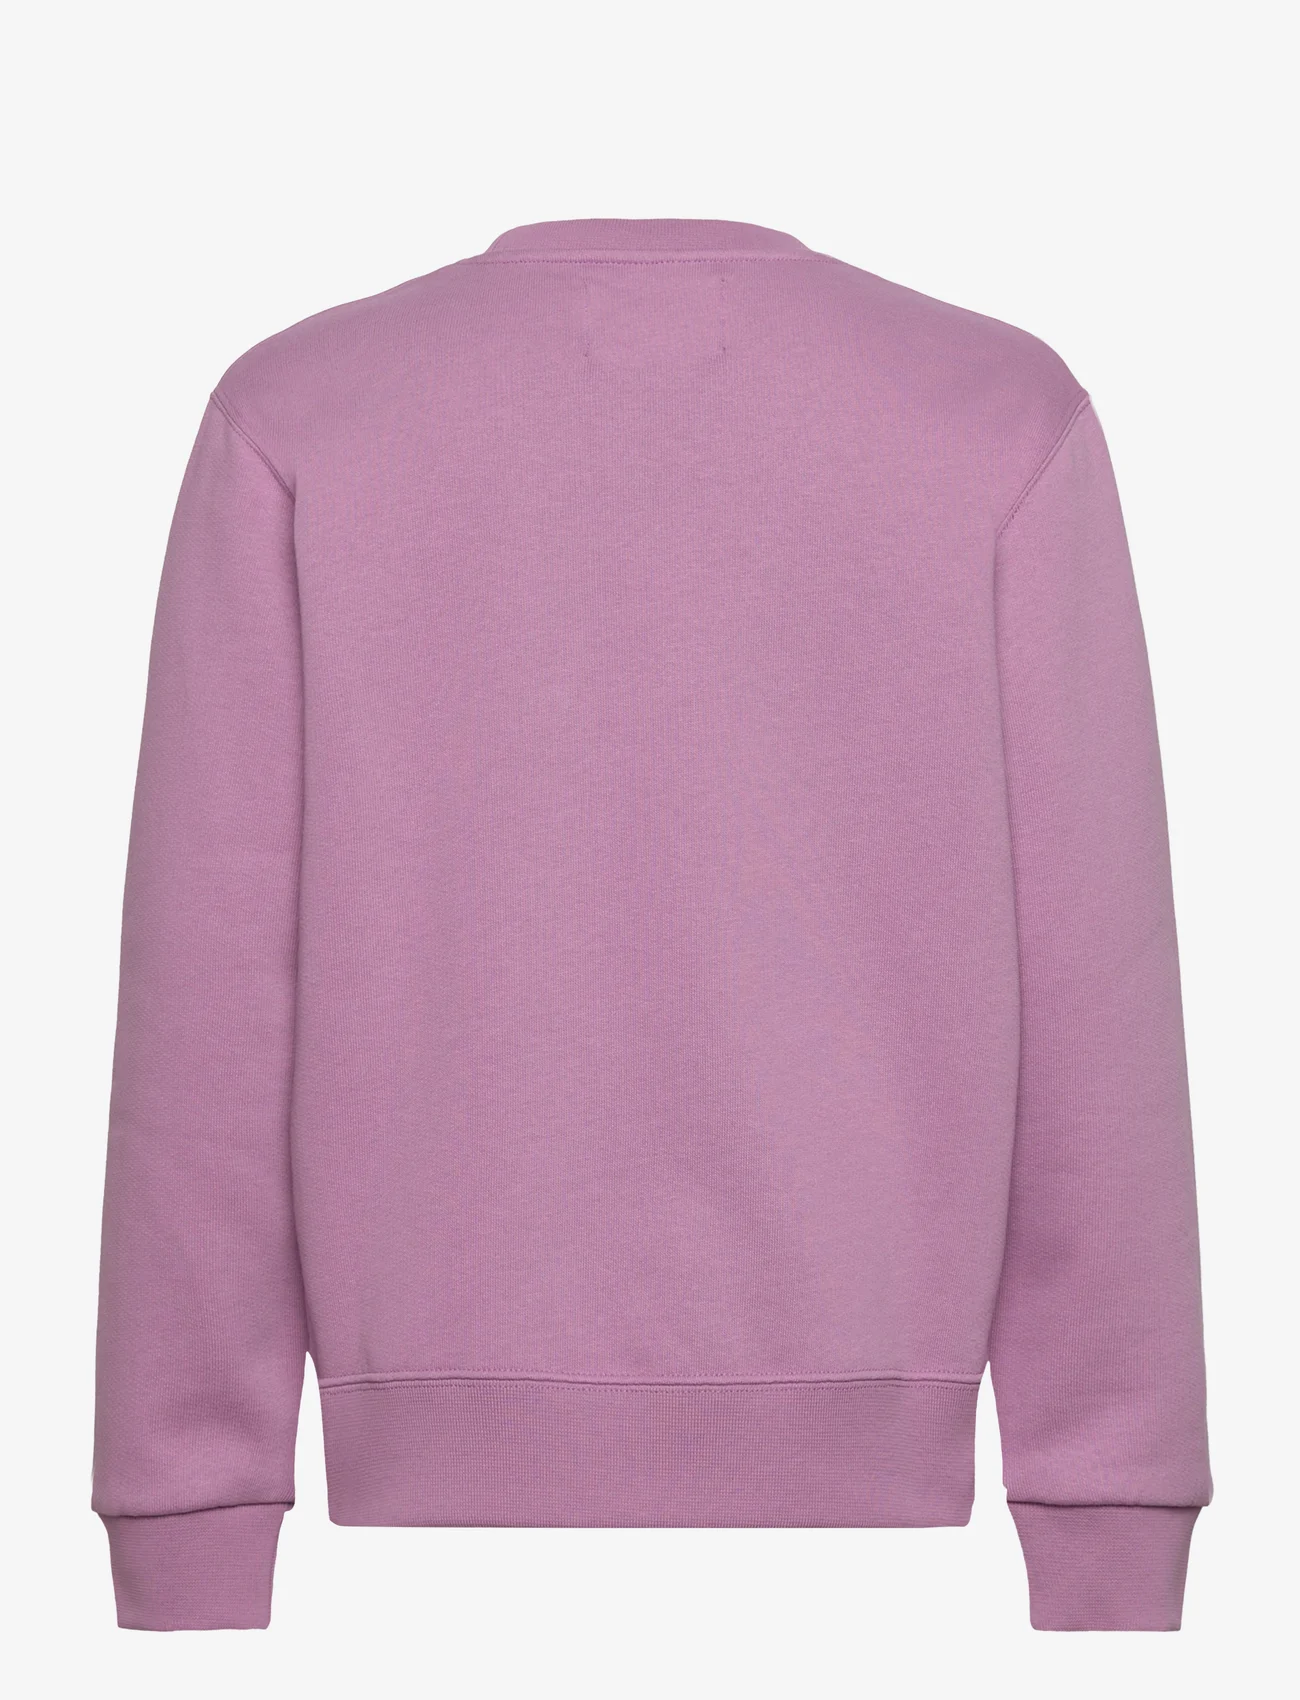 Wood Wood - Rod applique junior sweatshirt - sweatshirts & hoodies - rosy lavender - 1